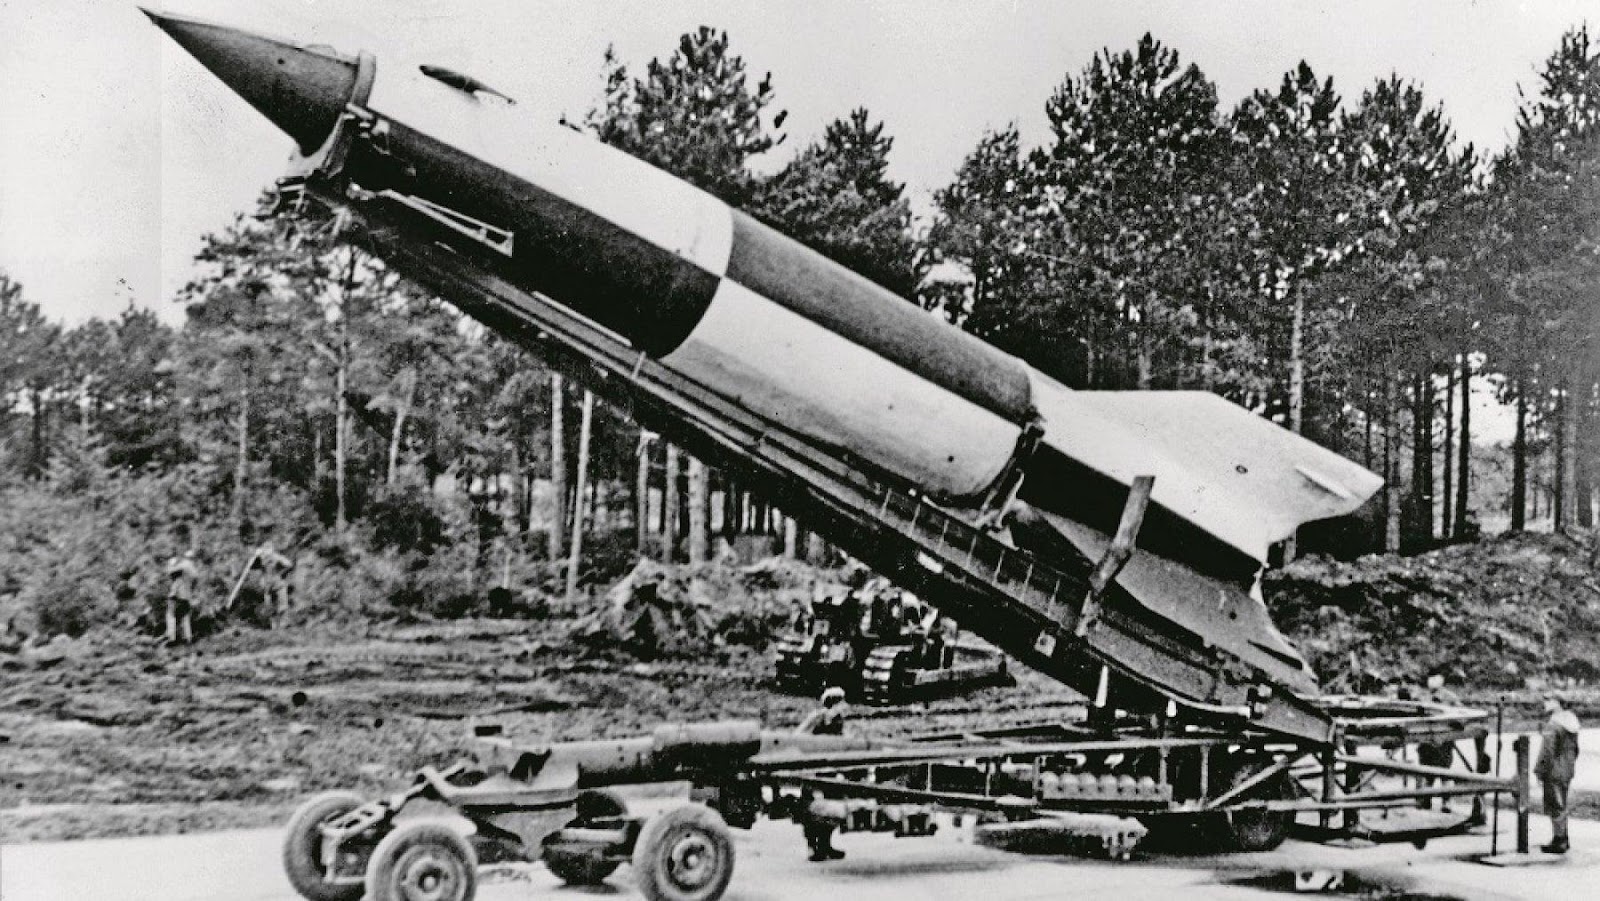 Крылатая королев. ФАУ-2 баллистическая ракета. Бомбардировка Лондона ФАУ 2. ФАУ-1 баллистическая ракета. ФАУ-2 баллистическая ракета фото.